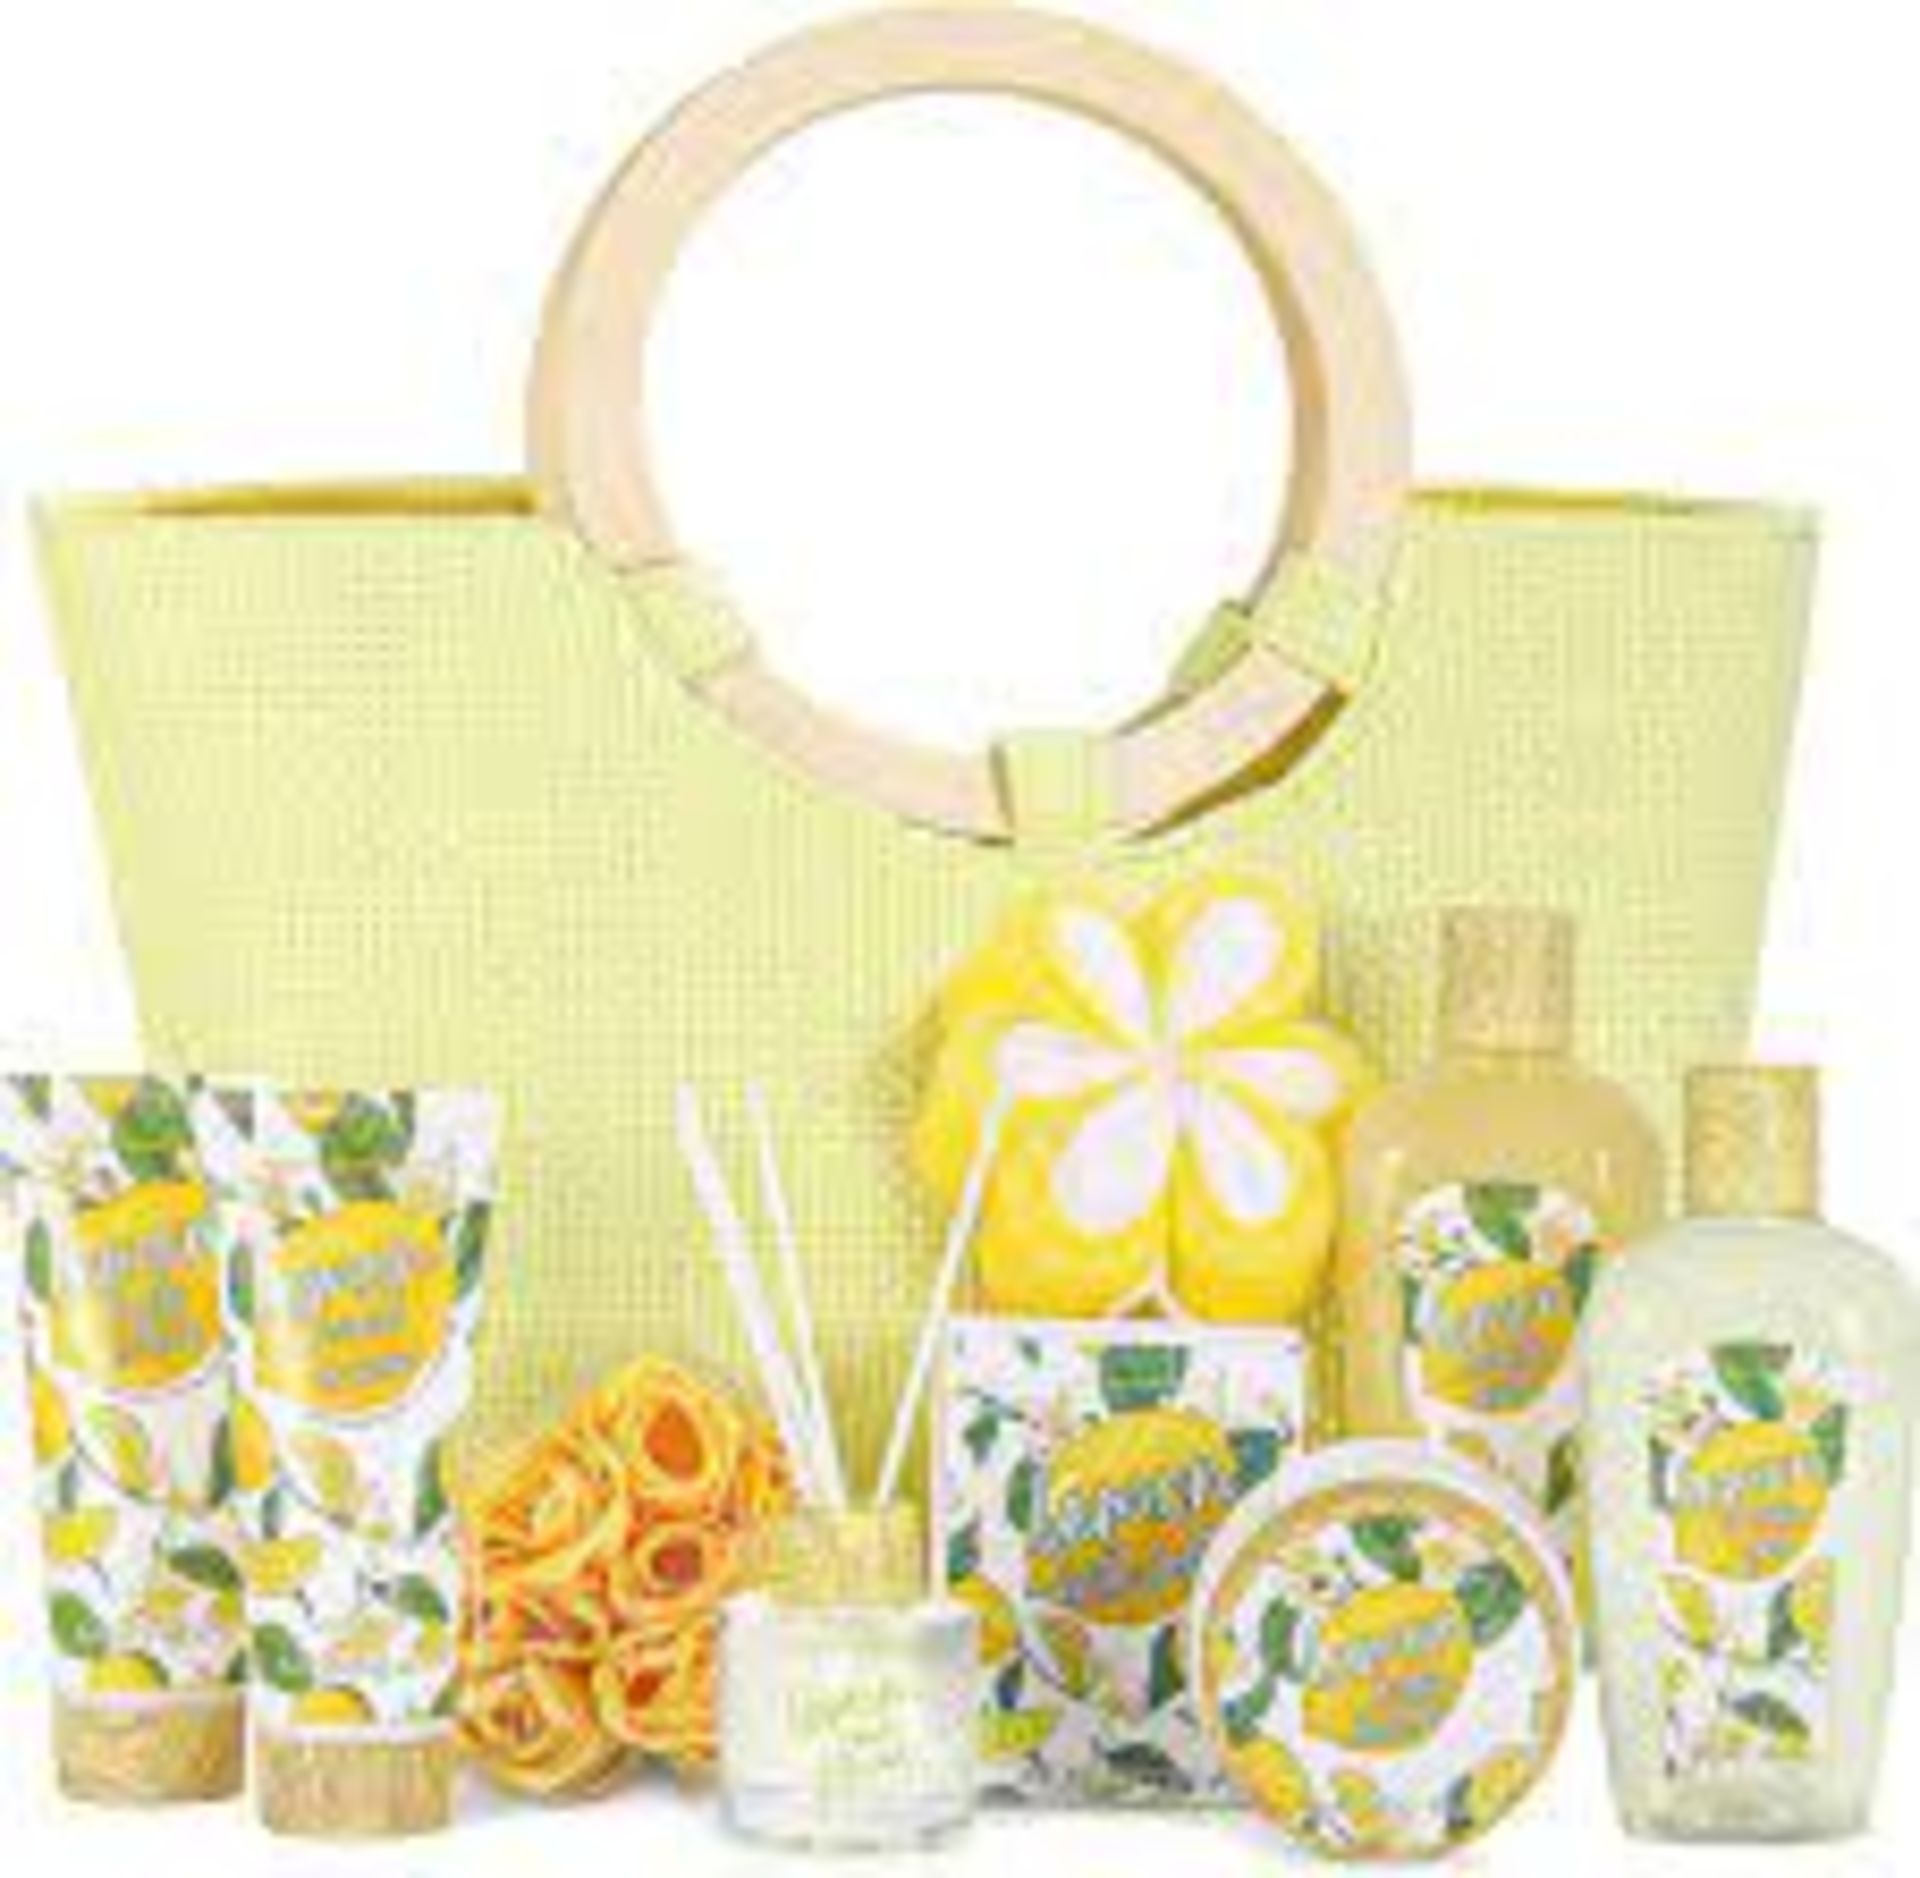 2 X NEW PACKAGED Lemon Everyday Bath Set Tote Gift Sets. (SKU: BEL-SC-03). Home Spa Kit Meets Your